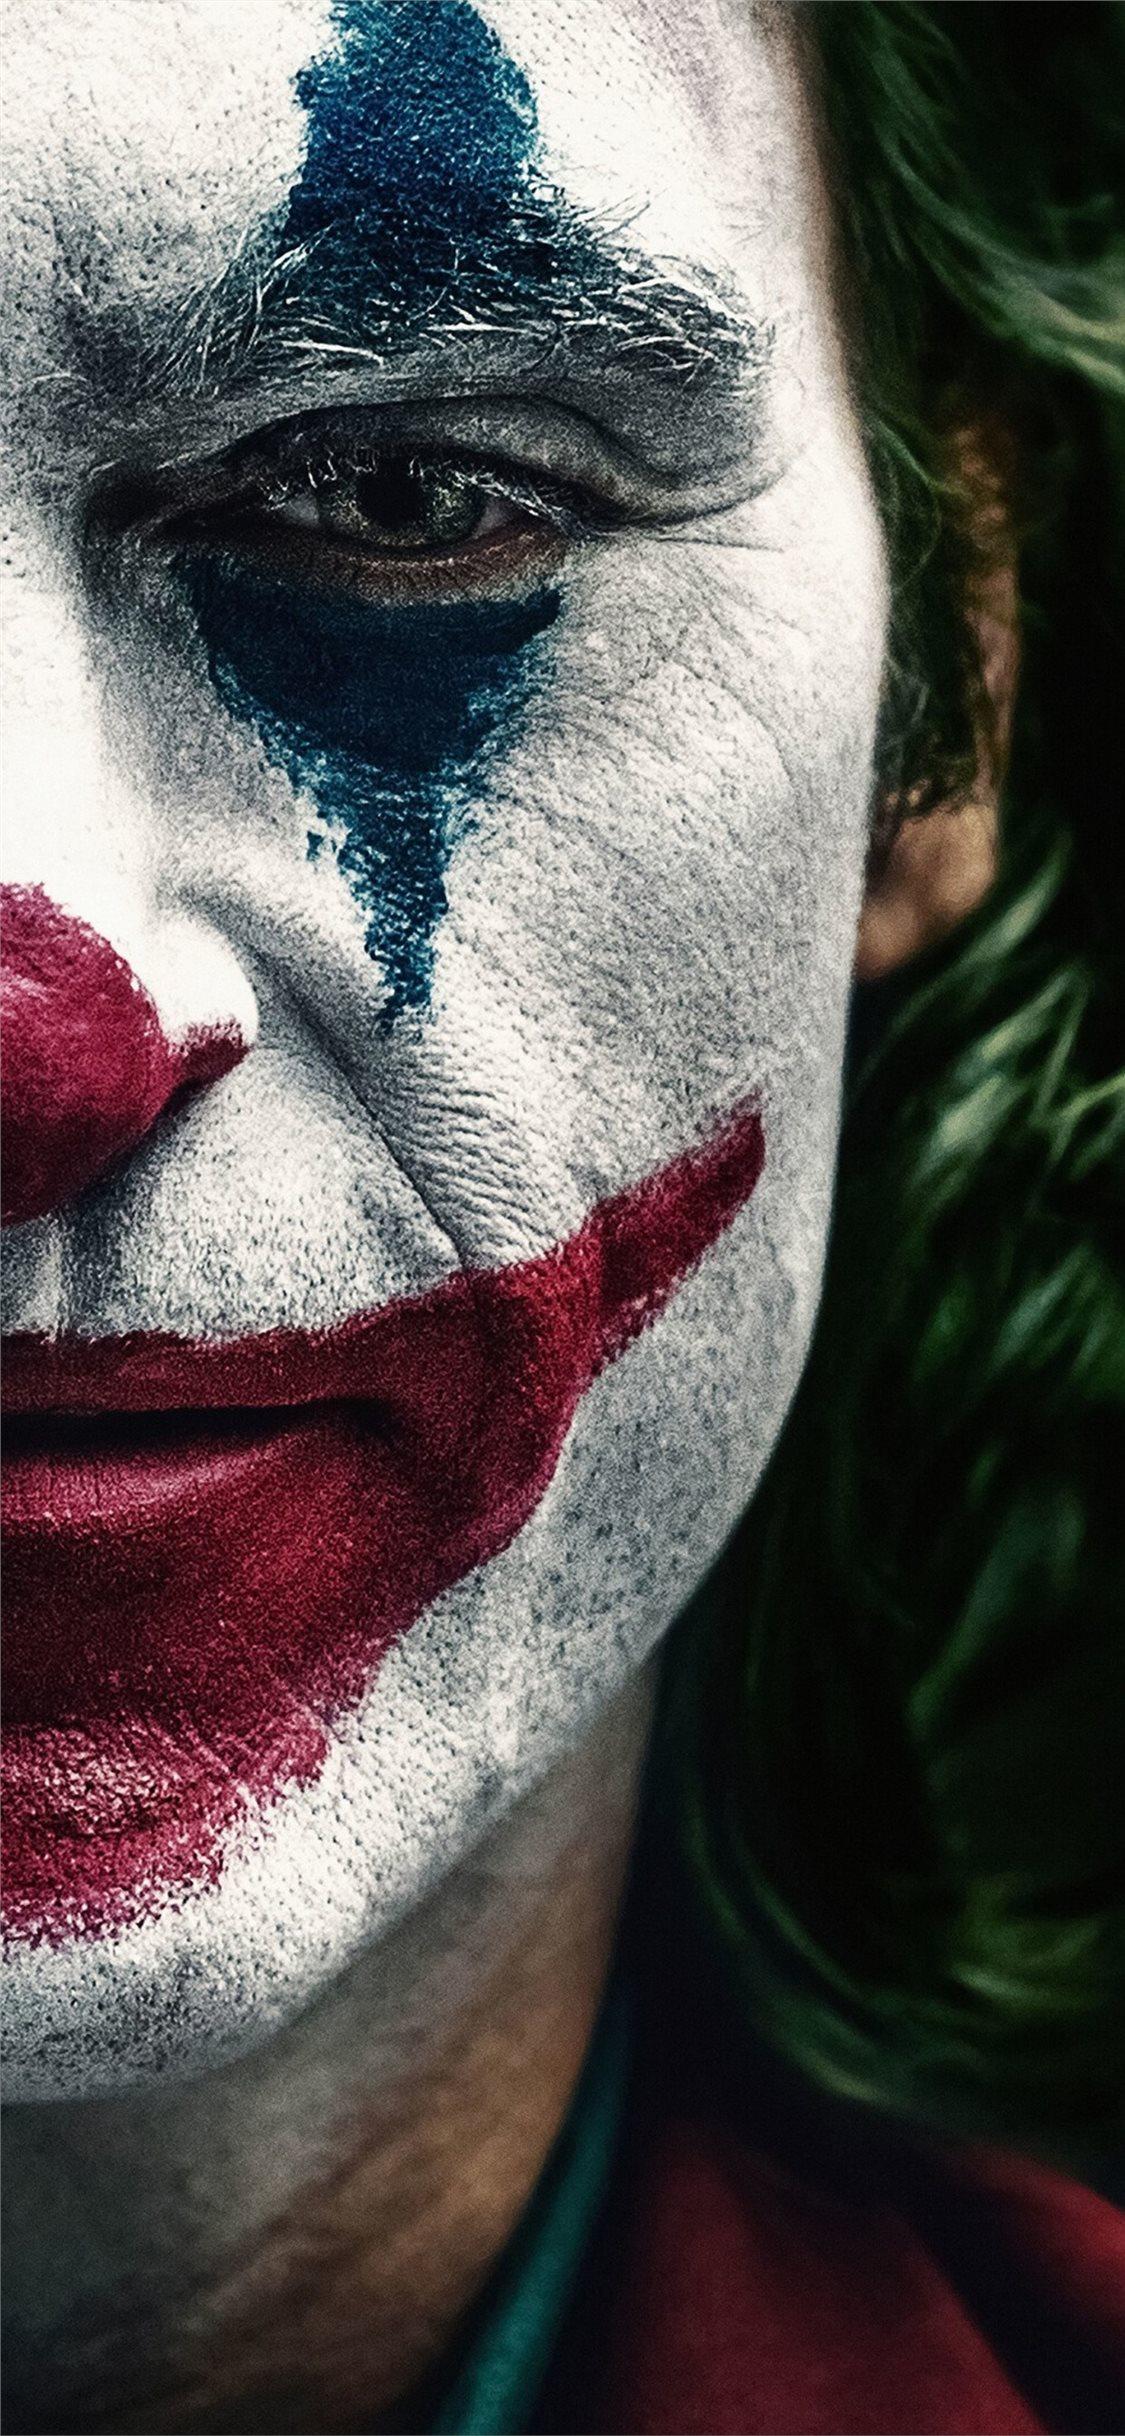 joker movie 2019 clown iPhone X Wallpaper Free Download